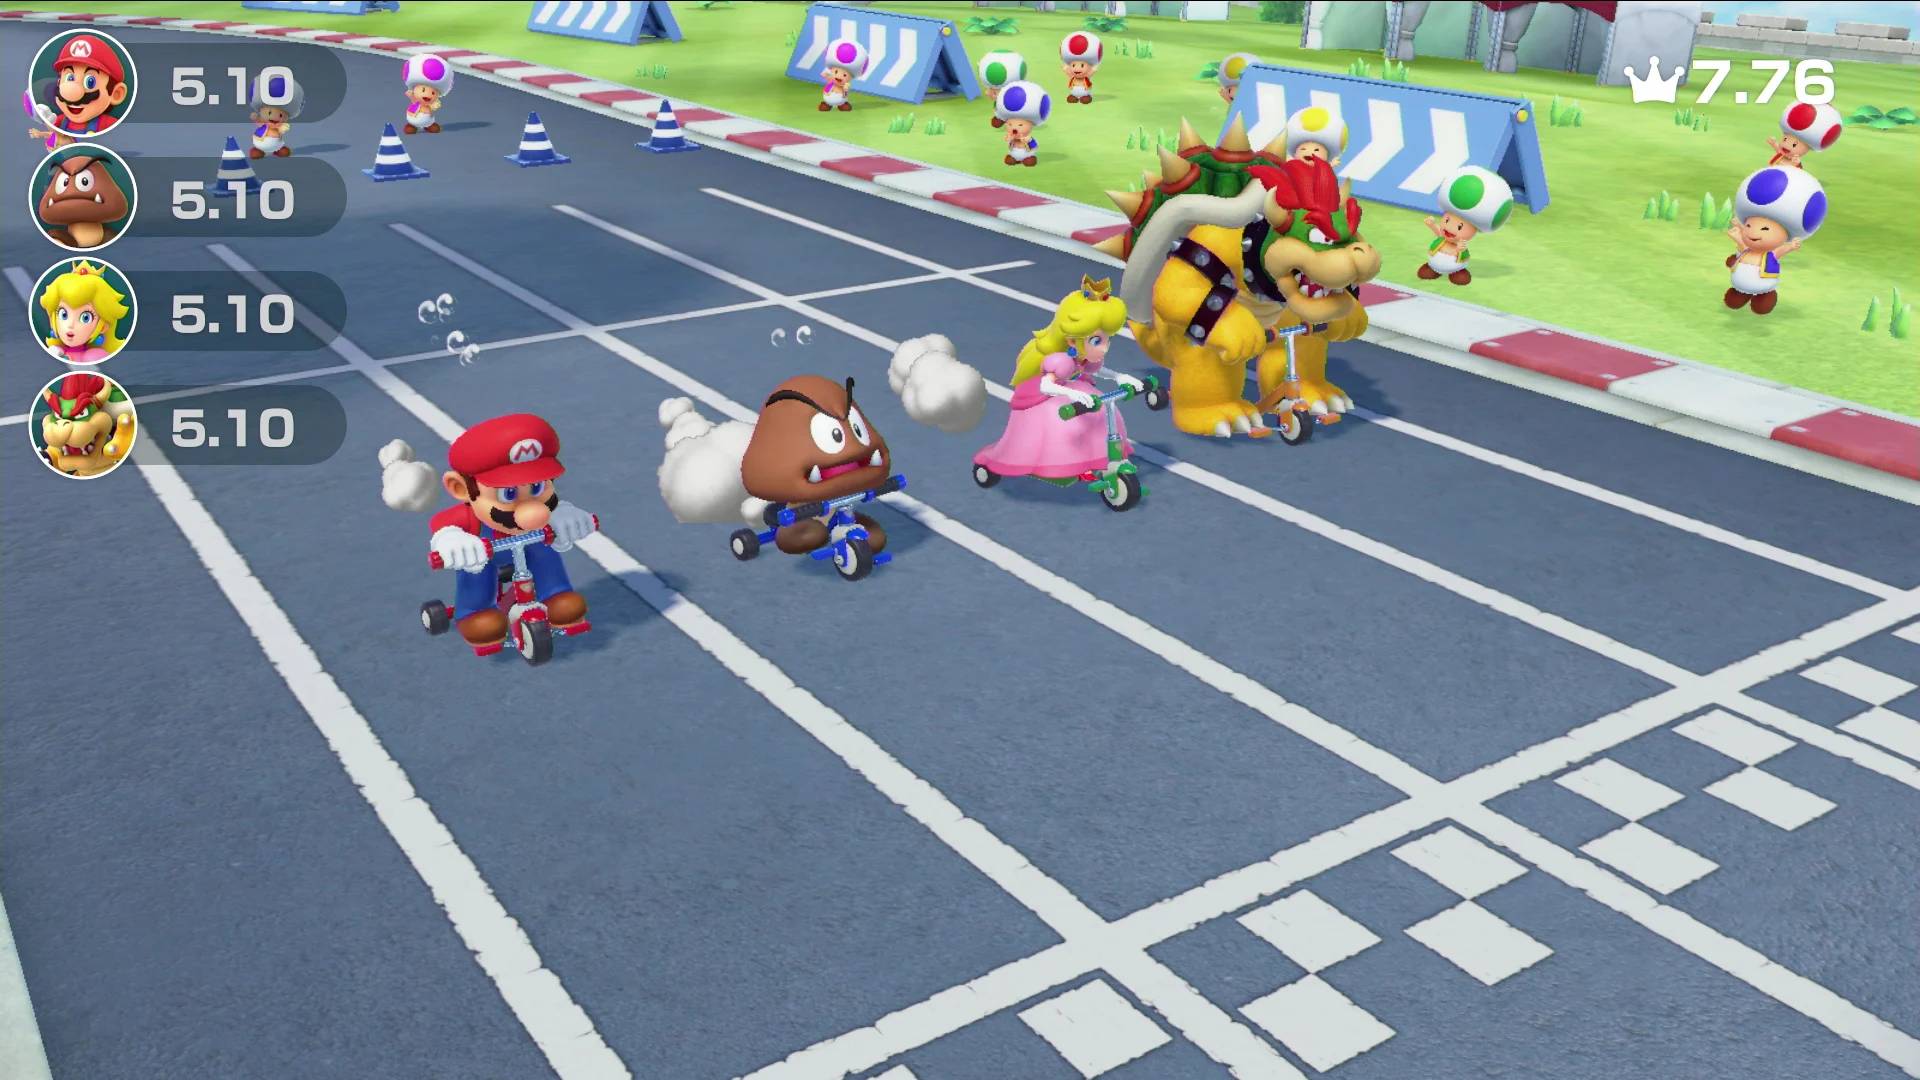 Top 10 Best Super Mario Party Minigames